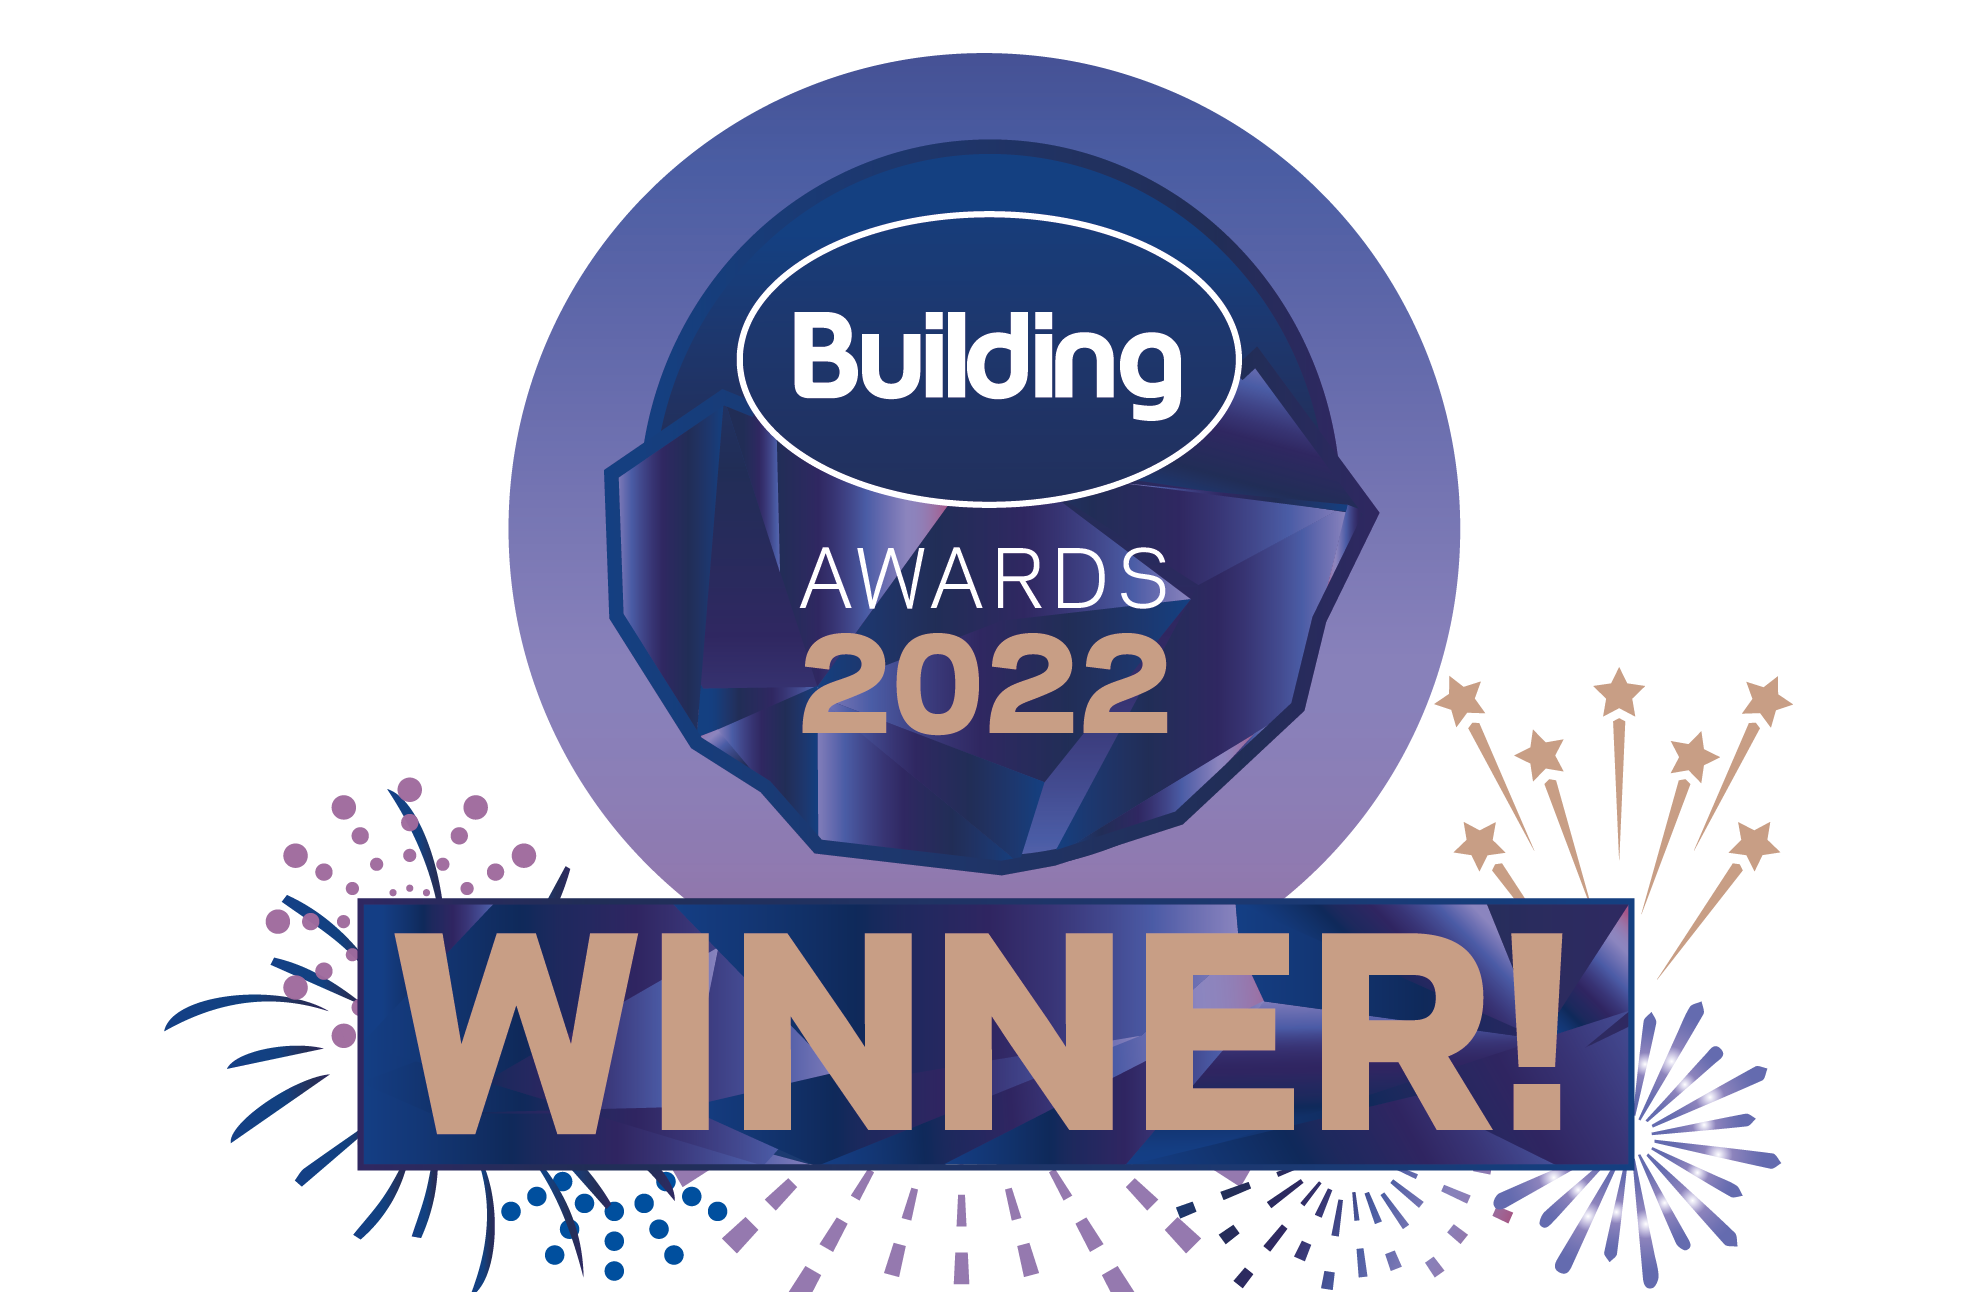 Building awards 2022 winner badge